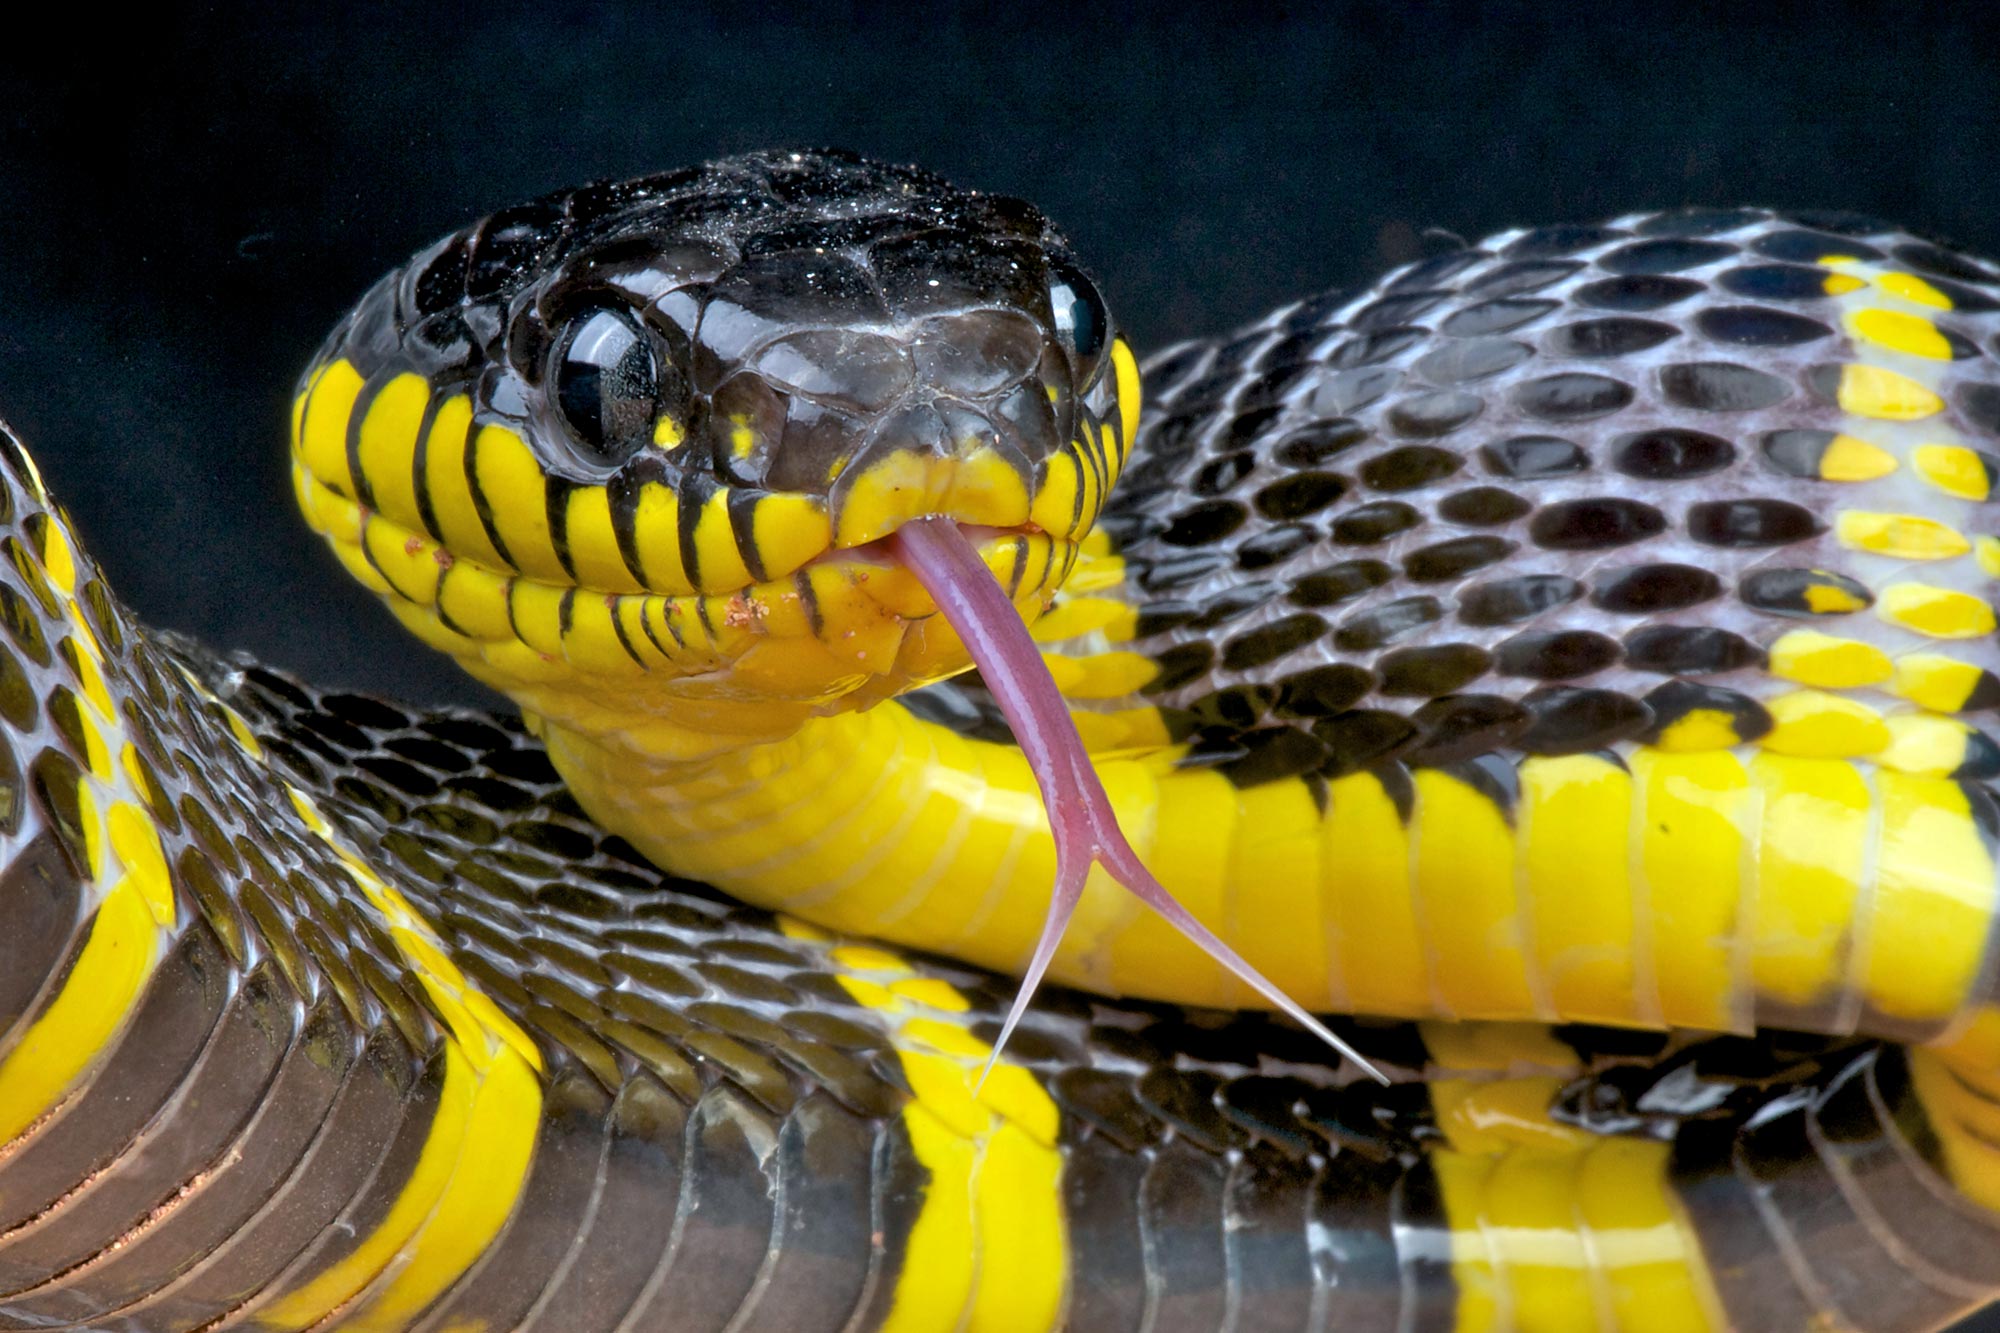 action-needed-on-dangerous-pet-snakes-demands-animal-welfare-experts